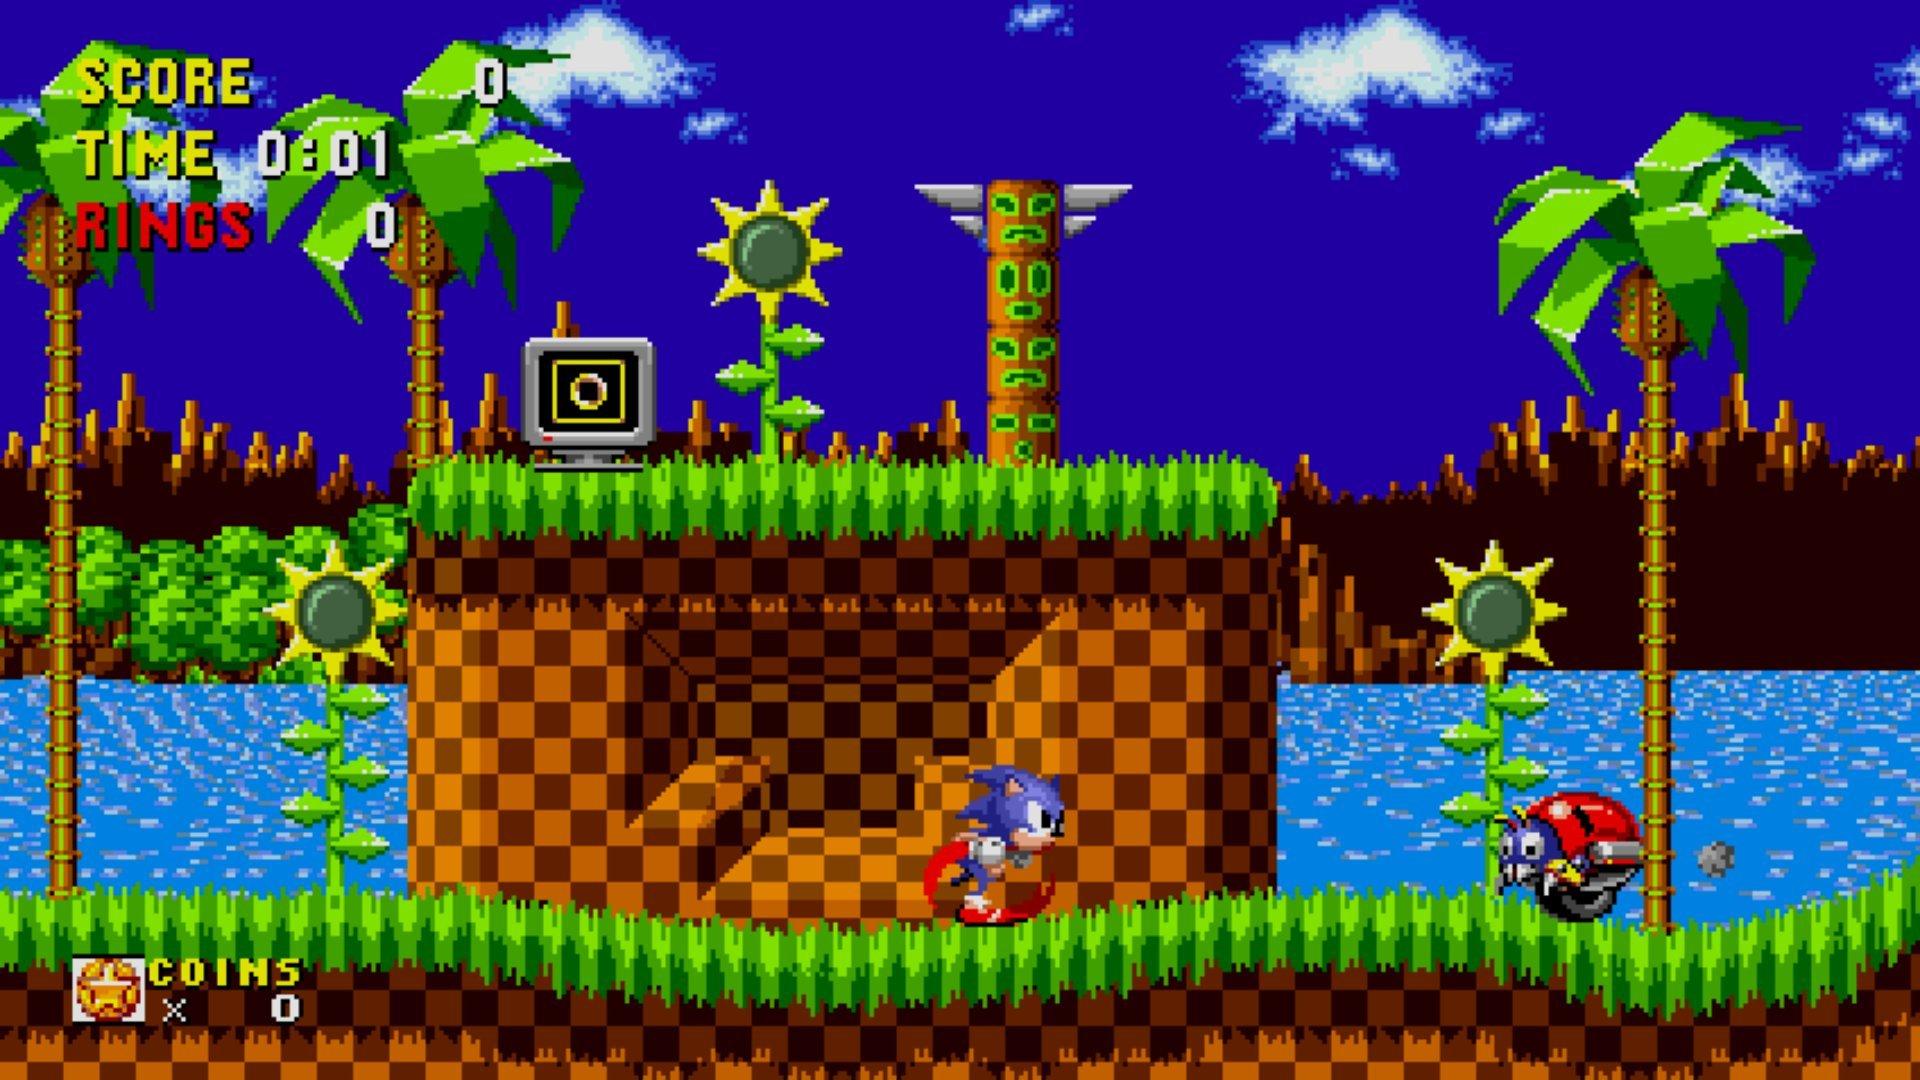 Sonic the Hedgehog 2 (Sega Game Gear, 1992) for sale online